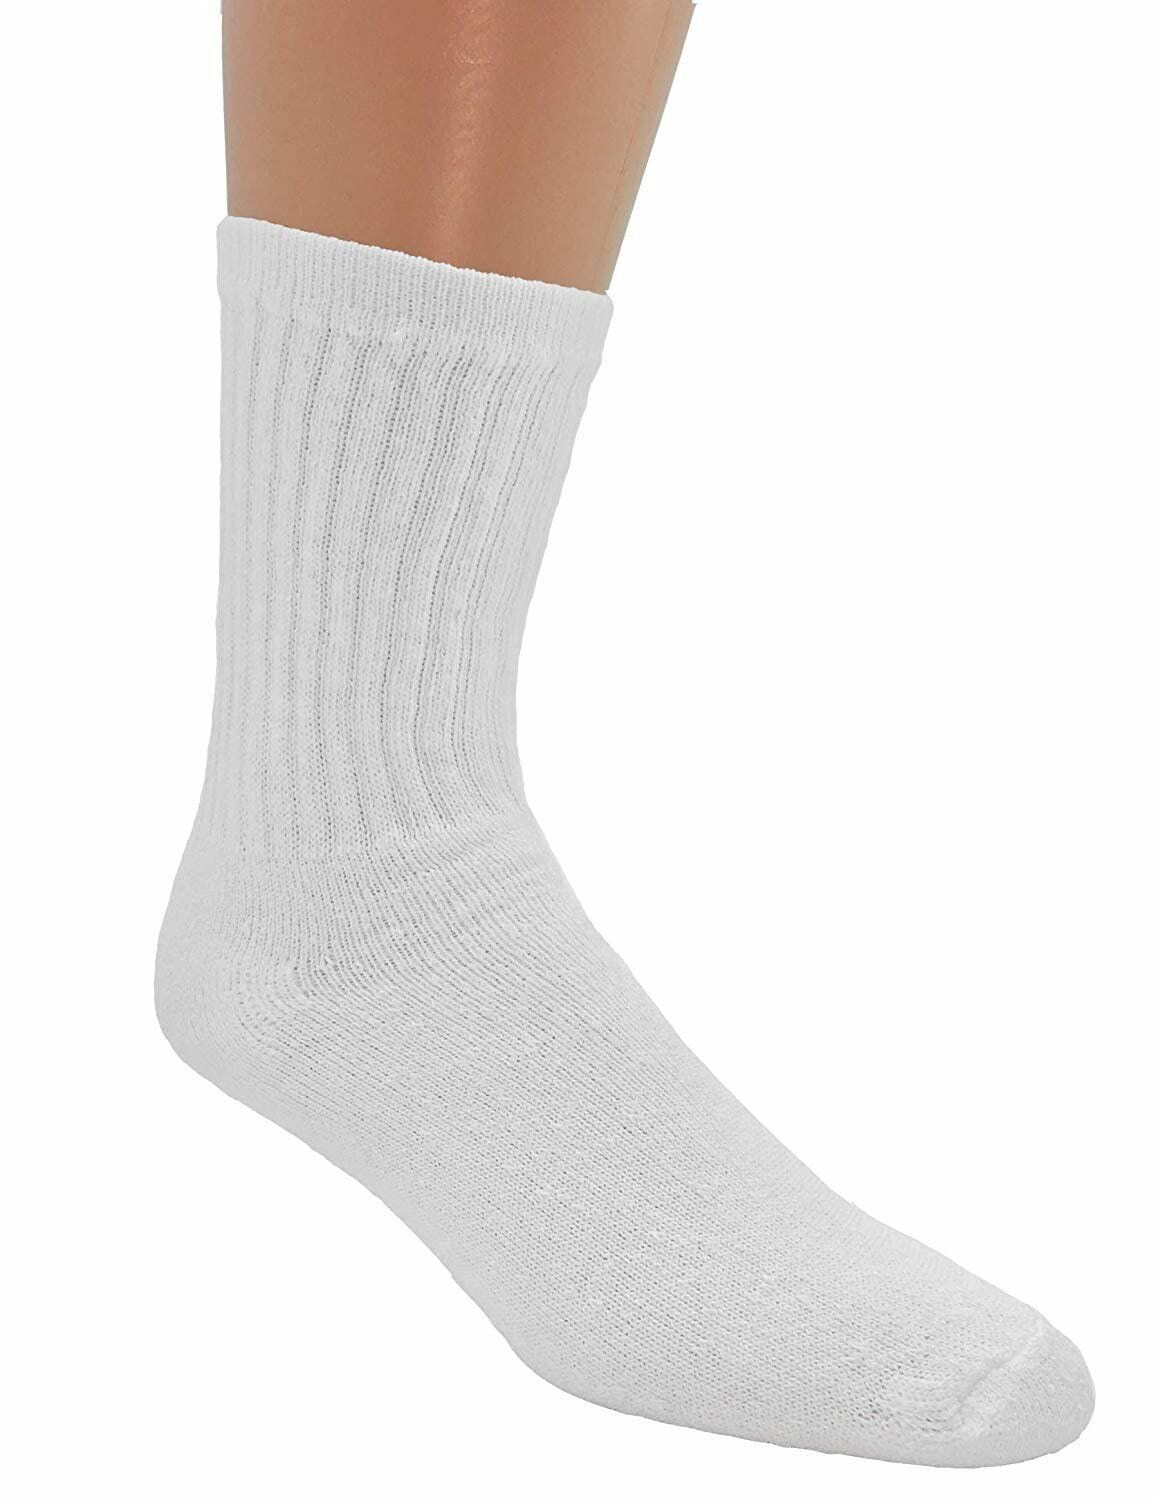 MDR American Made Athletic White Cotton Athletic Crew Socks - White - 1 Dozen - Mdrdistributors